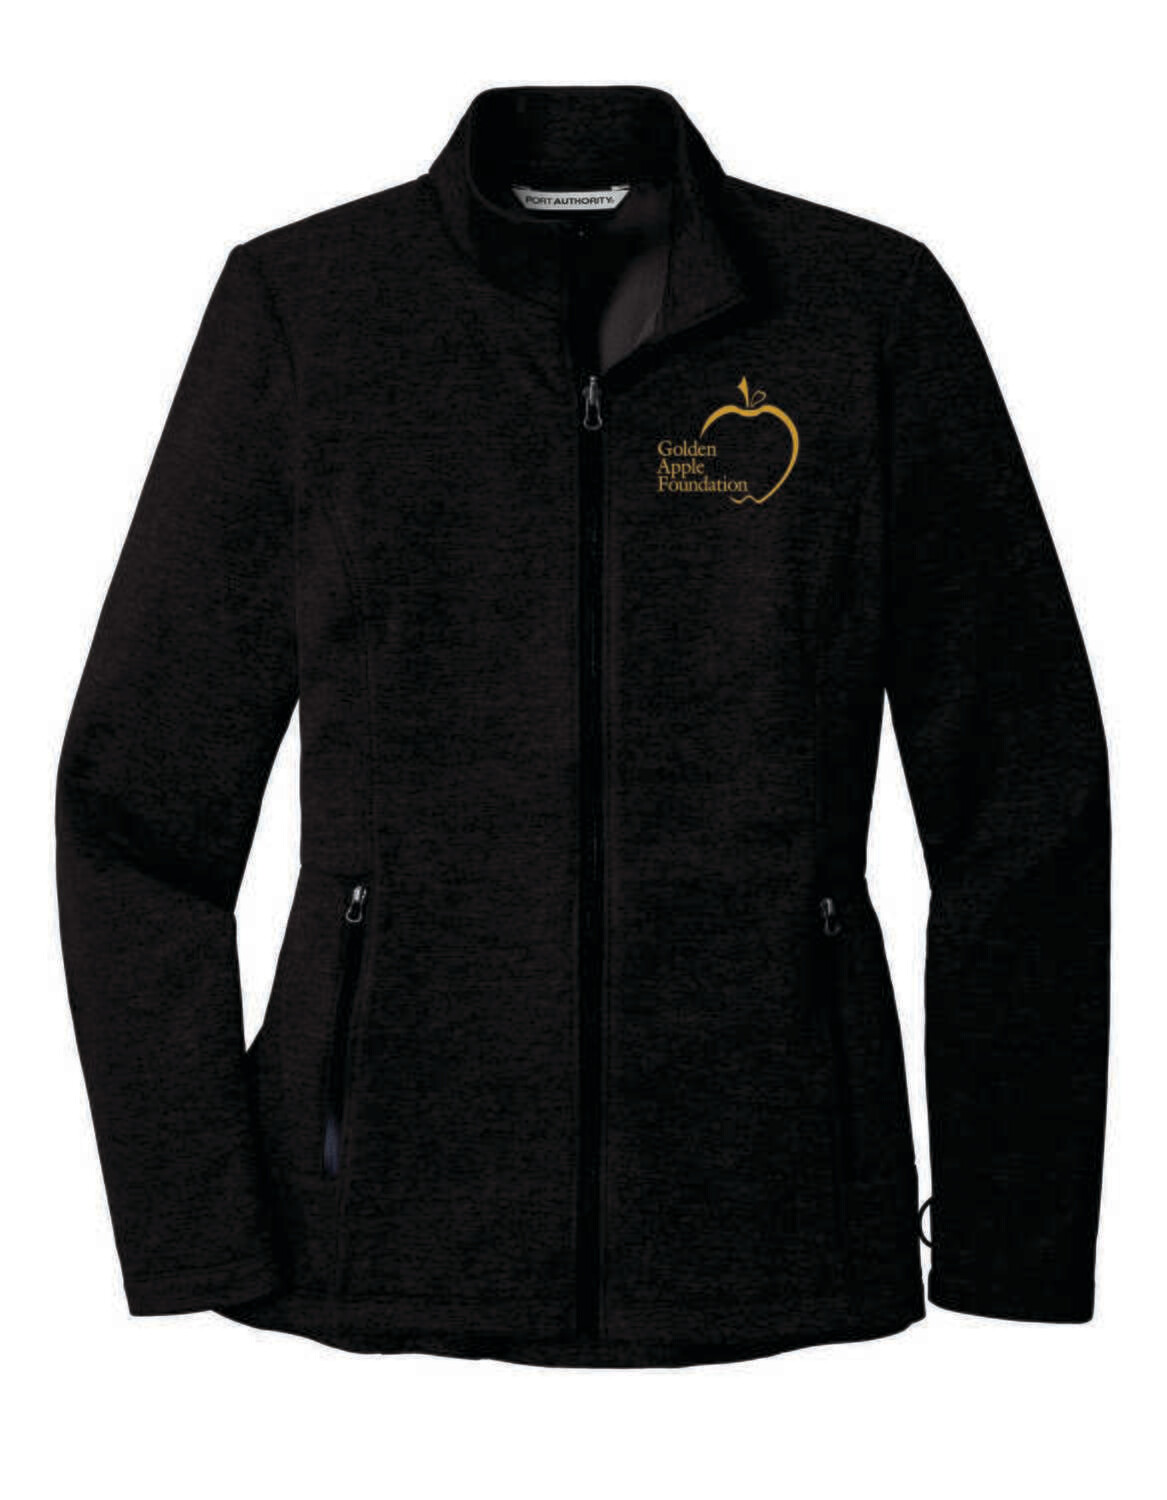 Golden Apple Foundation Ladies Full-Zip Jacket, Deep Black Heather